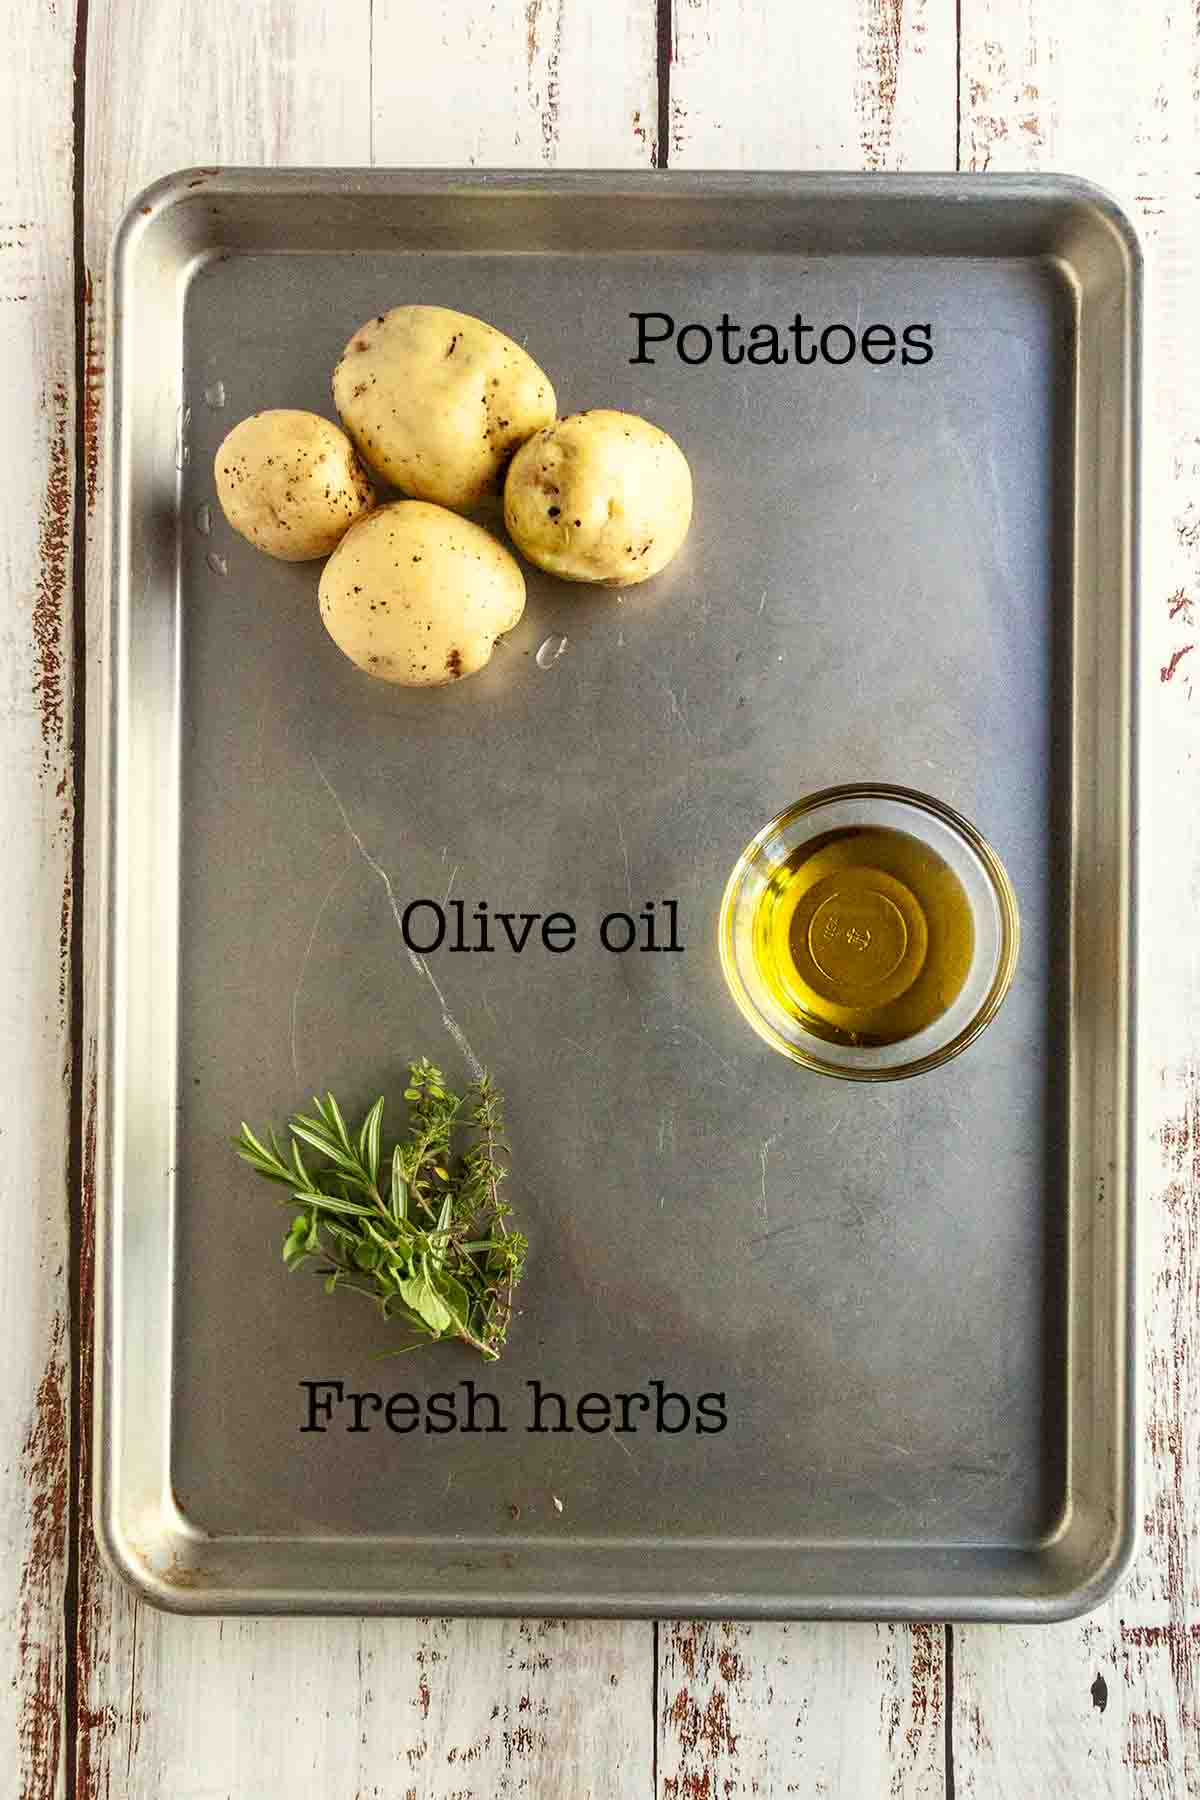 Ingredients for make-ahead roasted potatoes--potatoes, olive oil, fresh herbs.